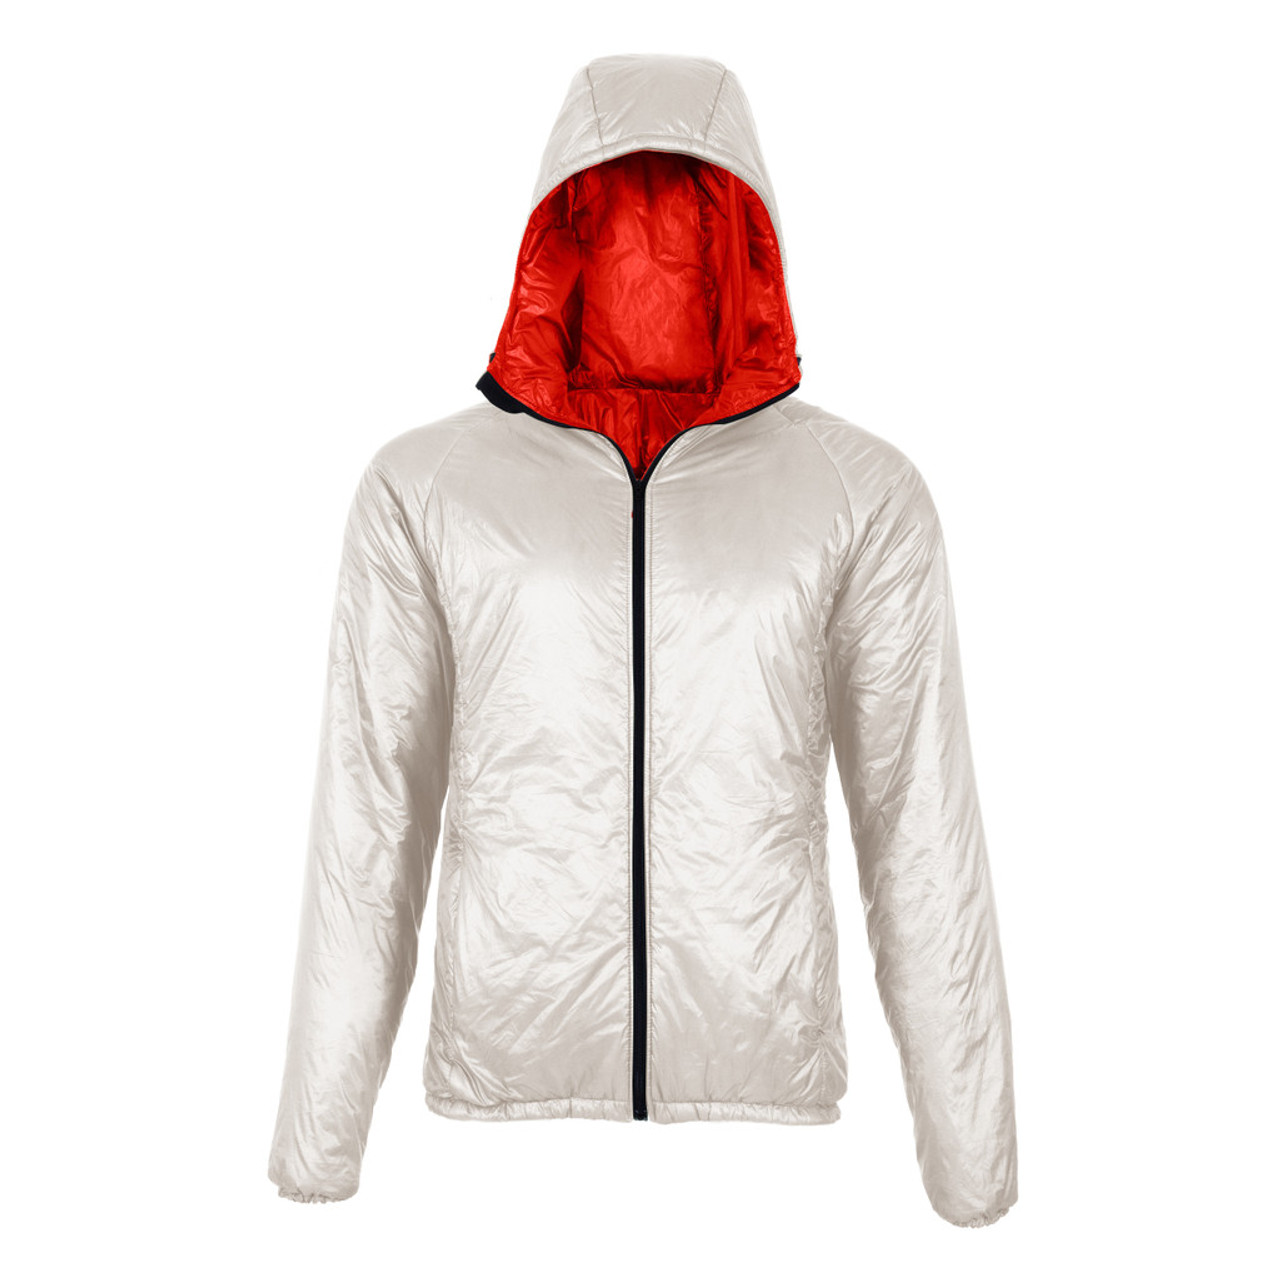 [PRODUCTION 2ND] Men's Torrid Jacket - Hood - XLarge/Tall - White Blaze  10D/Red 10D (217249.03)